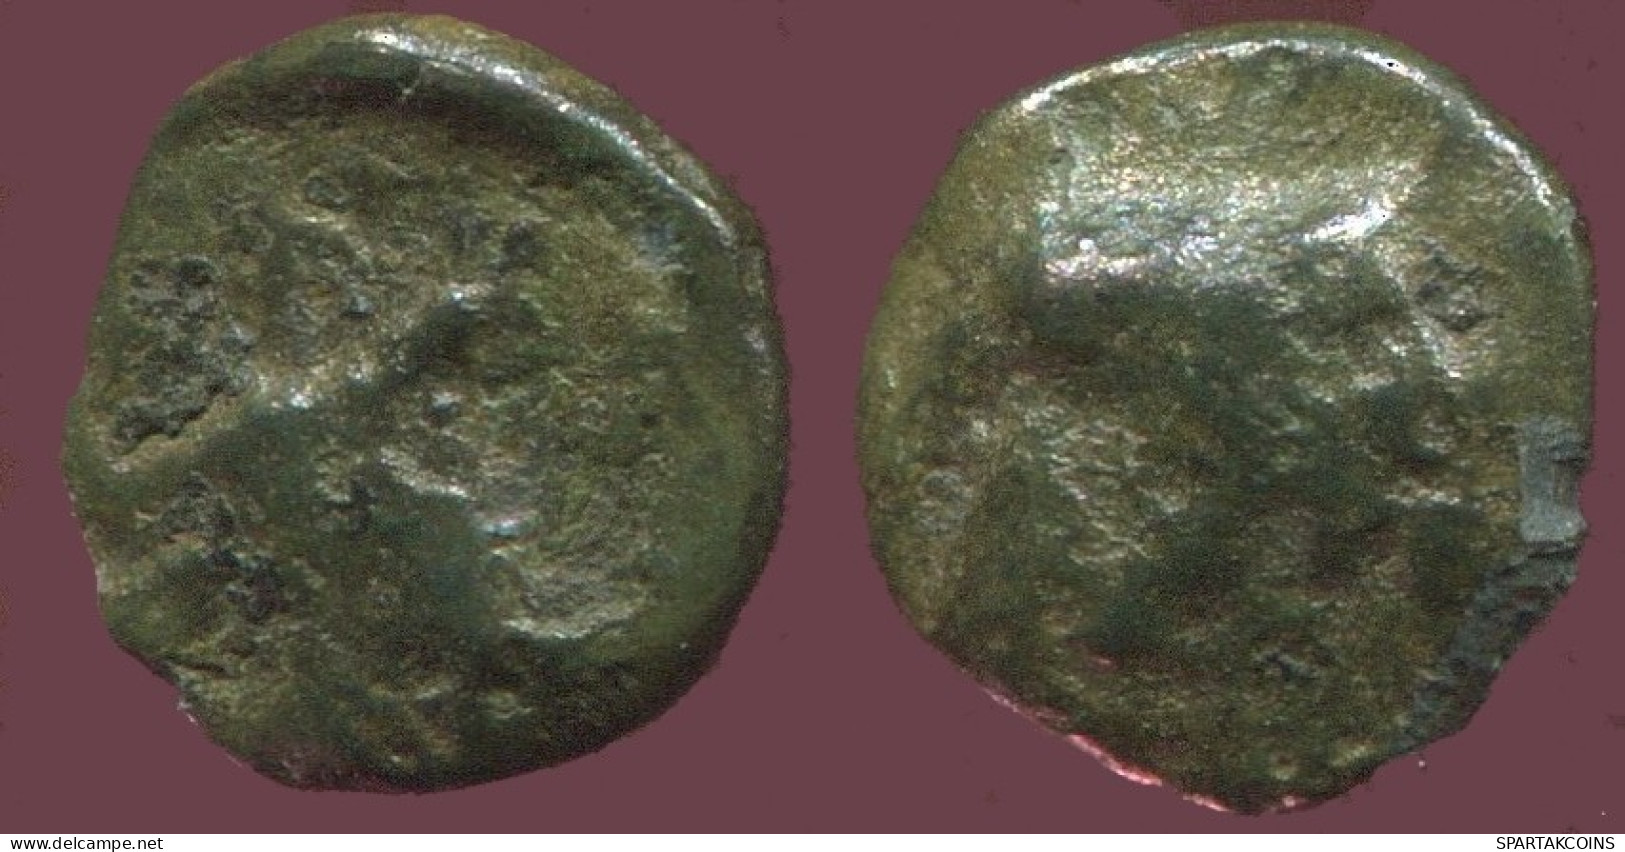 Antike Authentische Original GRIECHISCHE Münze 0.5g/8mm #ANT1577.9.D.A - Grecques